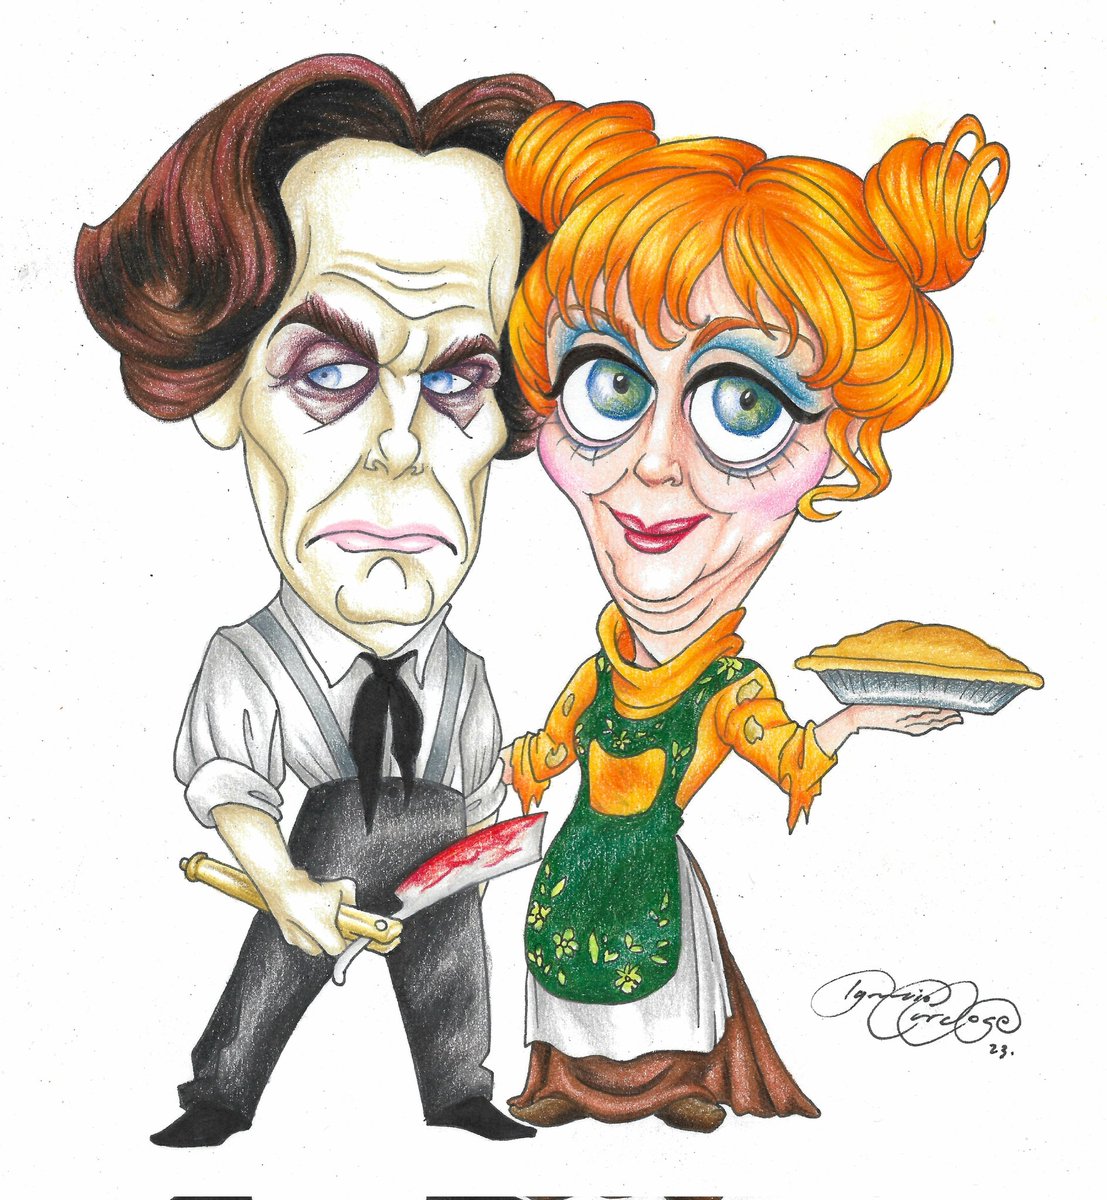 Sweeney Todd 🫀
2023.

#sweeneytodd #mrslovett #thedemonbarberoffleetstreet #georgehearn #angelalansbury #stephensondheim #ilustracion #dibujo #arte #caricatura #broadwaymusical #benjaminbarker